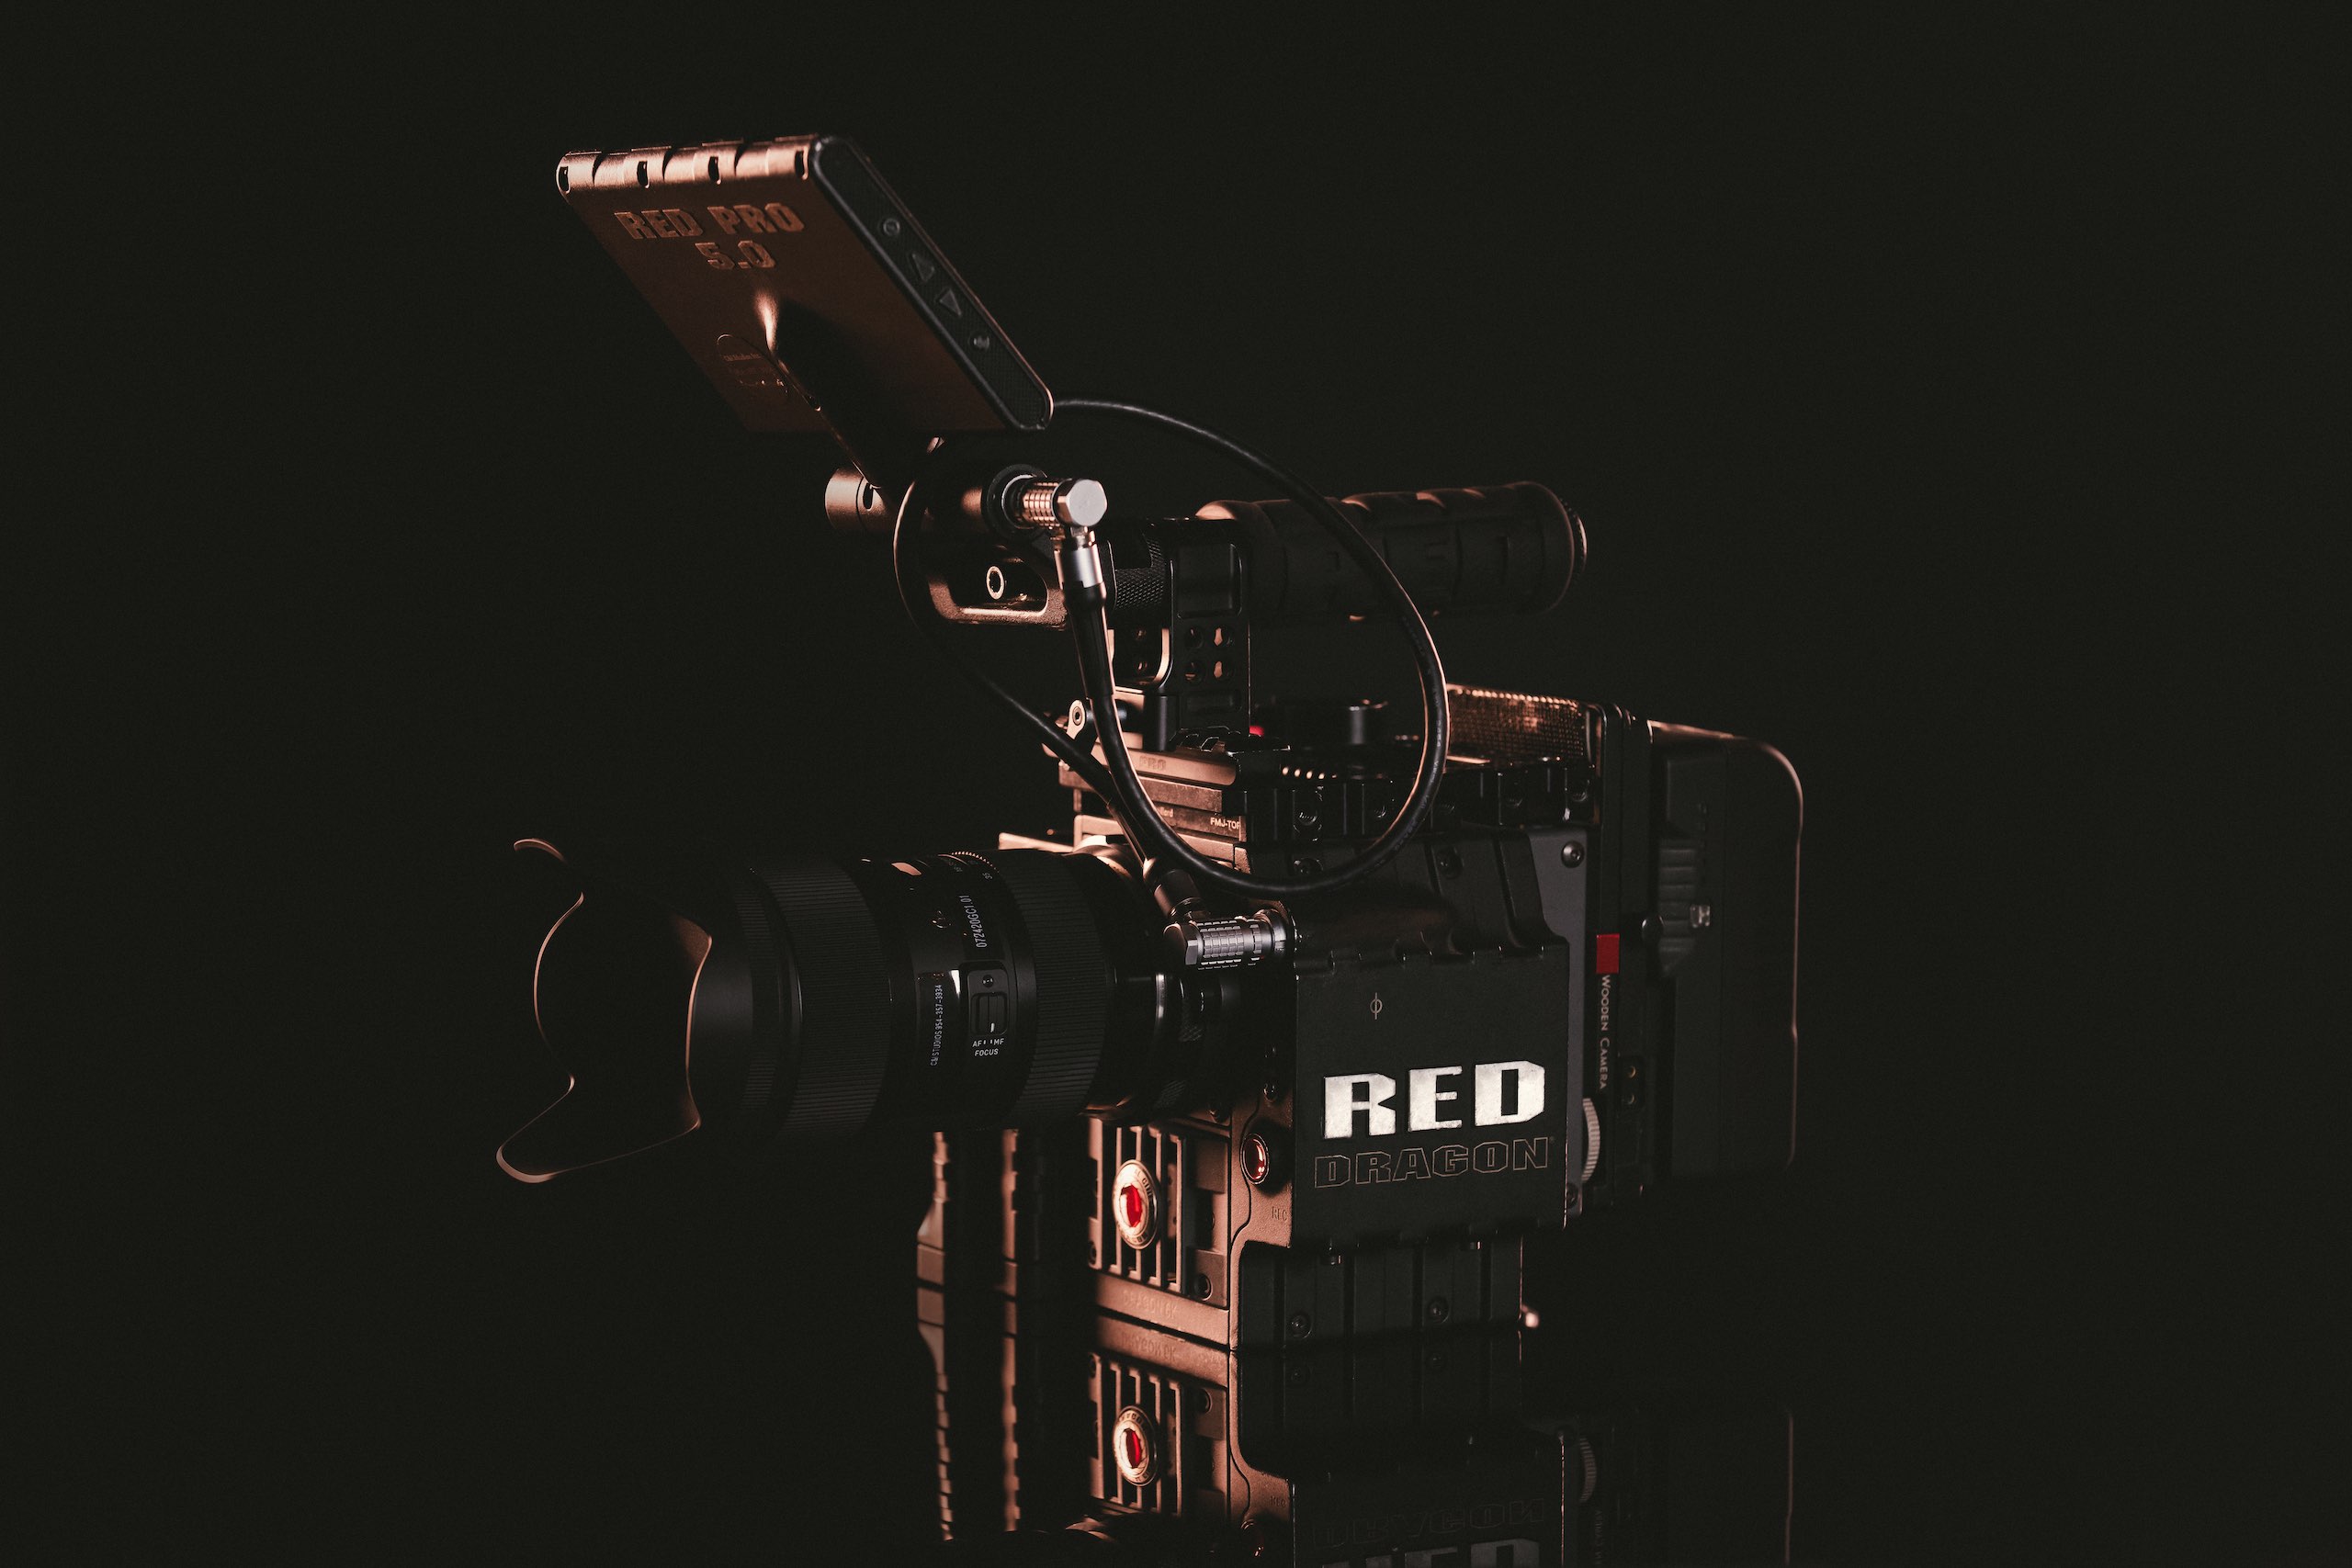 RED 5k Scarlet Dragon Cinema Camera for rent on display